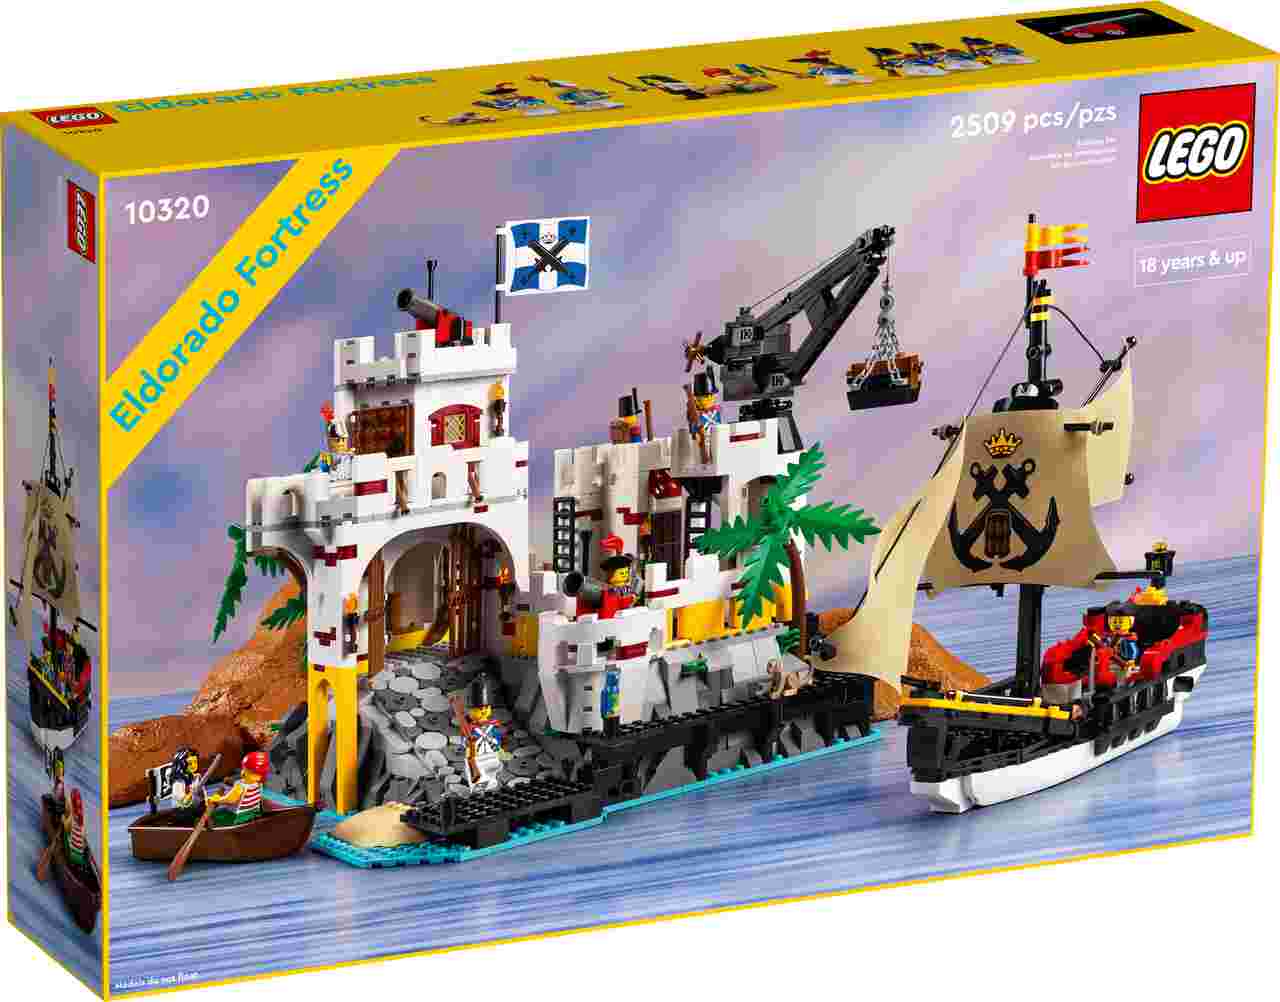 Neues Lego Retro Piraten Set vorgestellt!